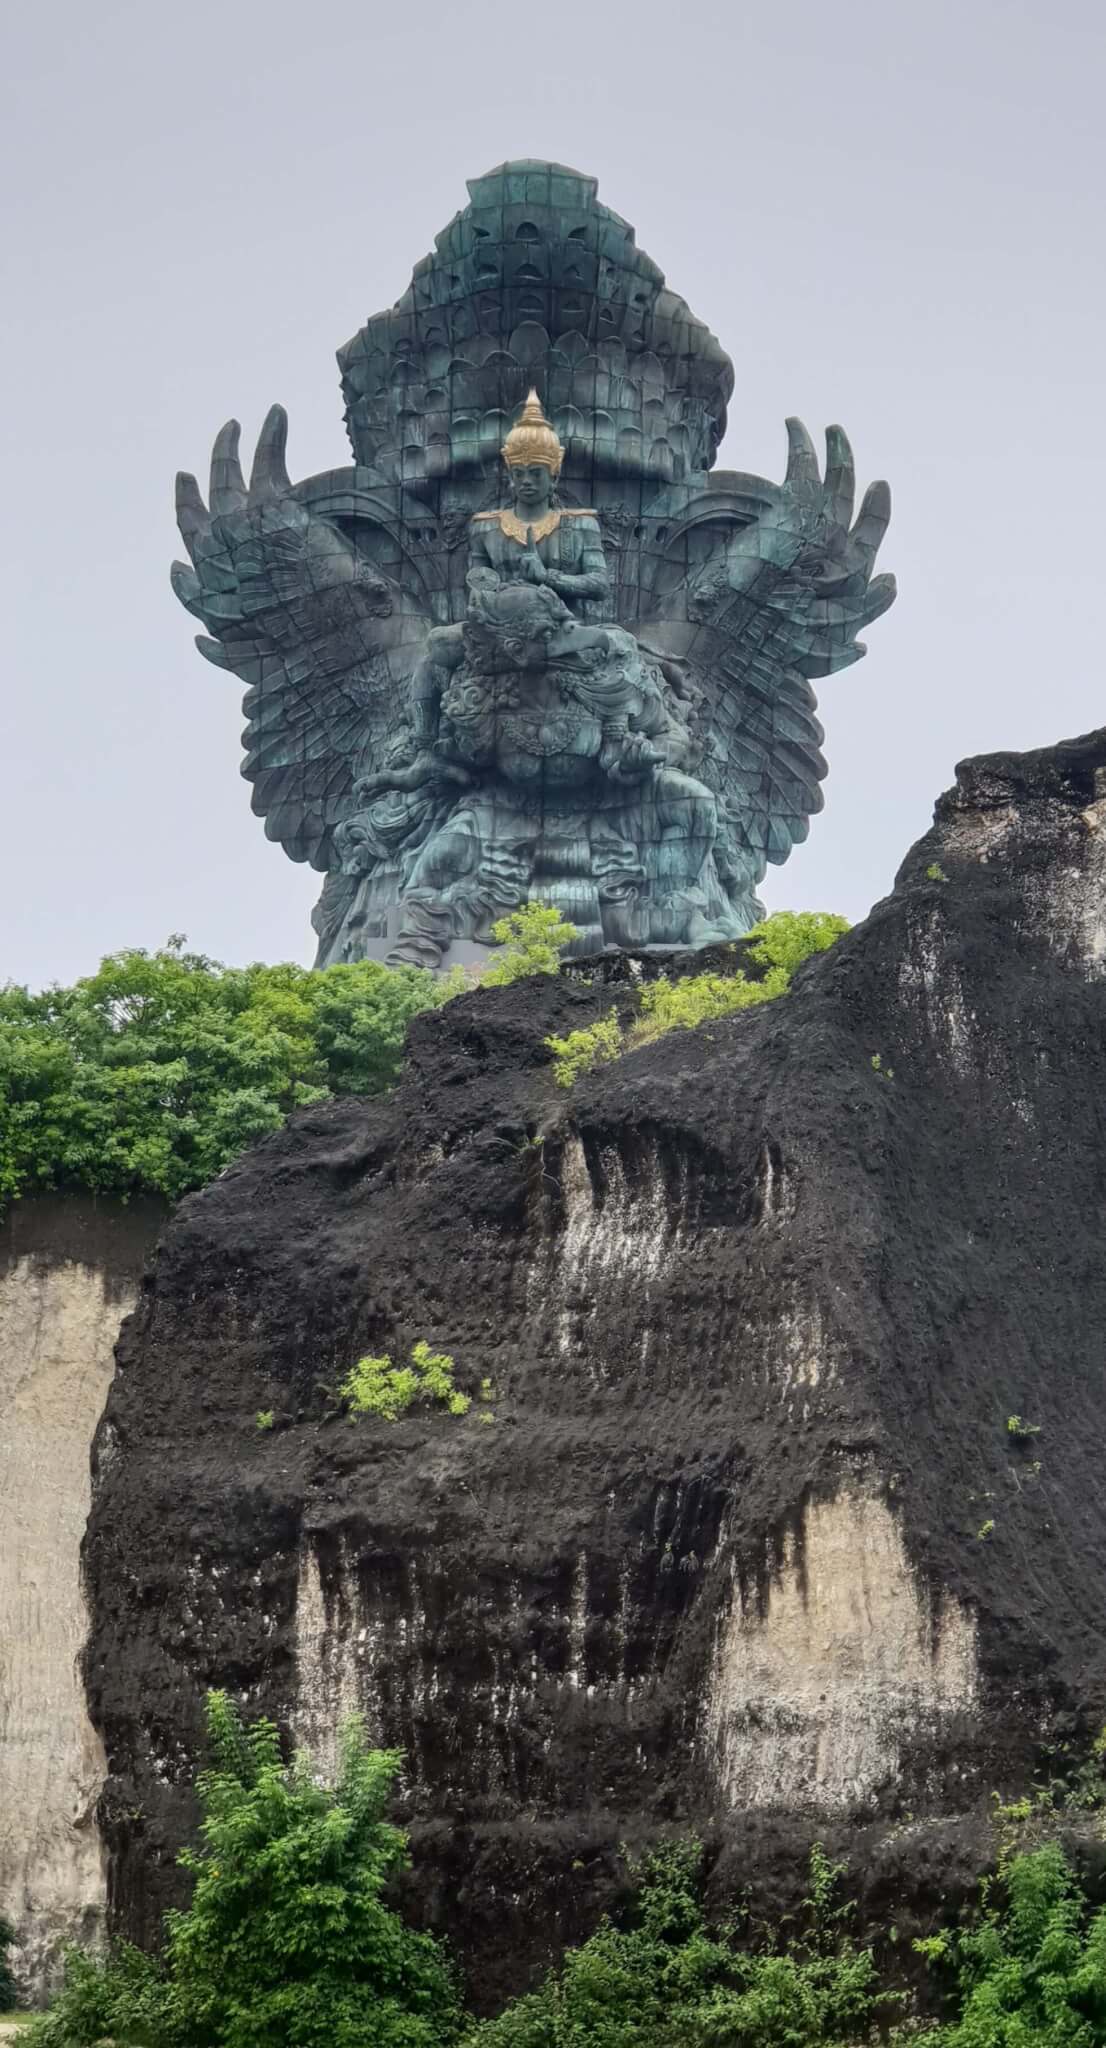 The Garuda Wisnu Kencana statue is the main highlight of the cultural park and must-do in Uluwatu